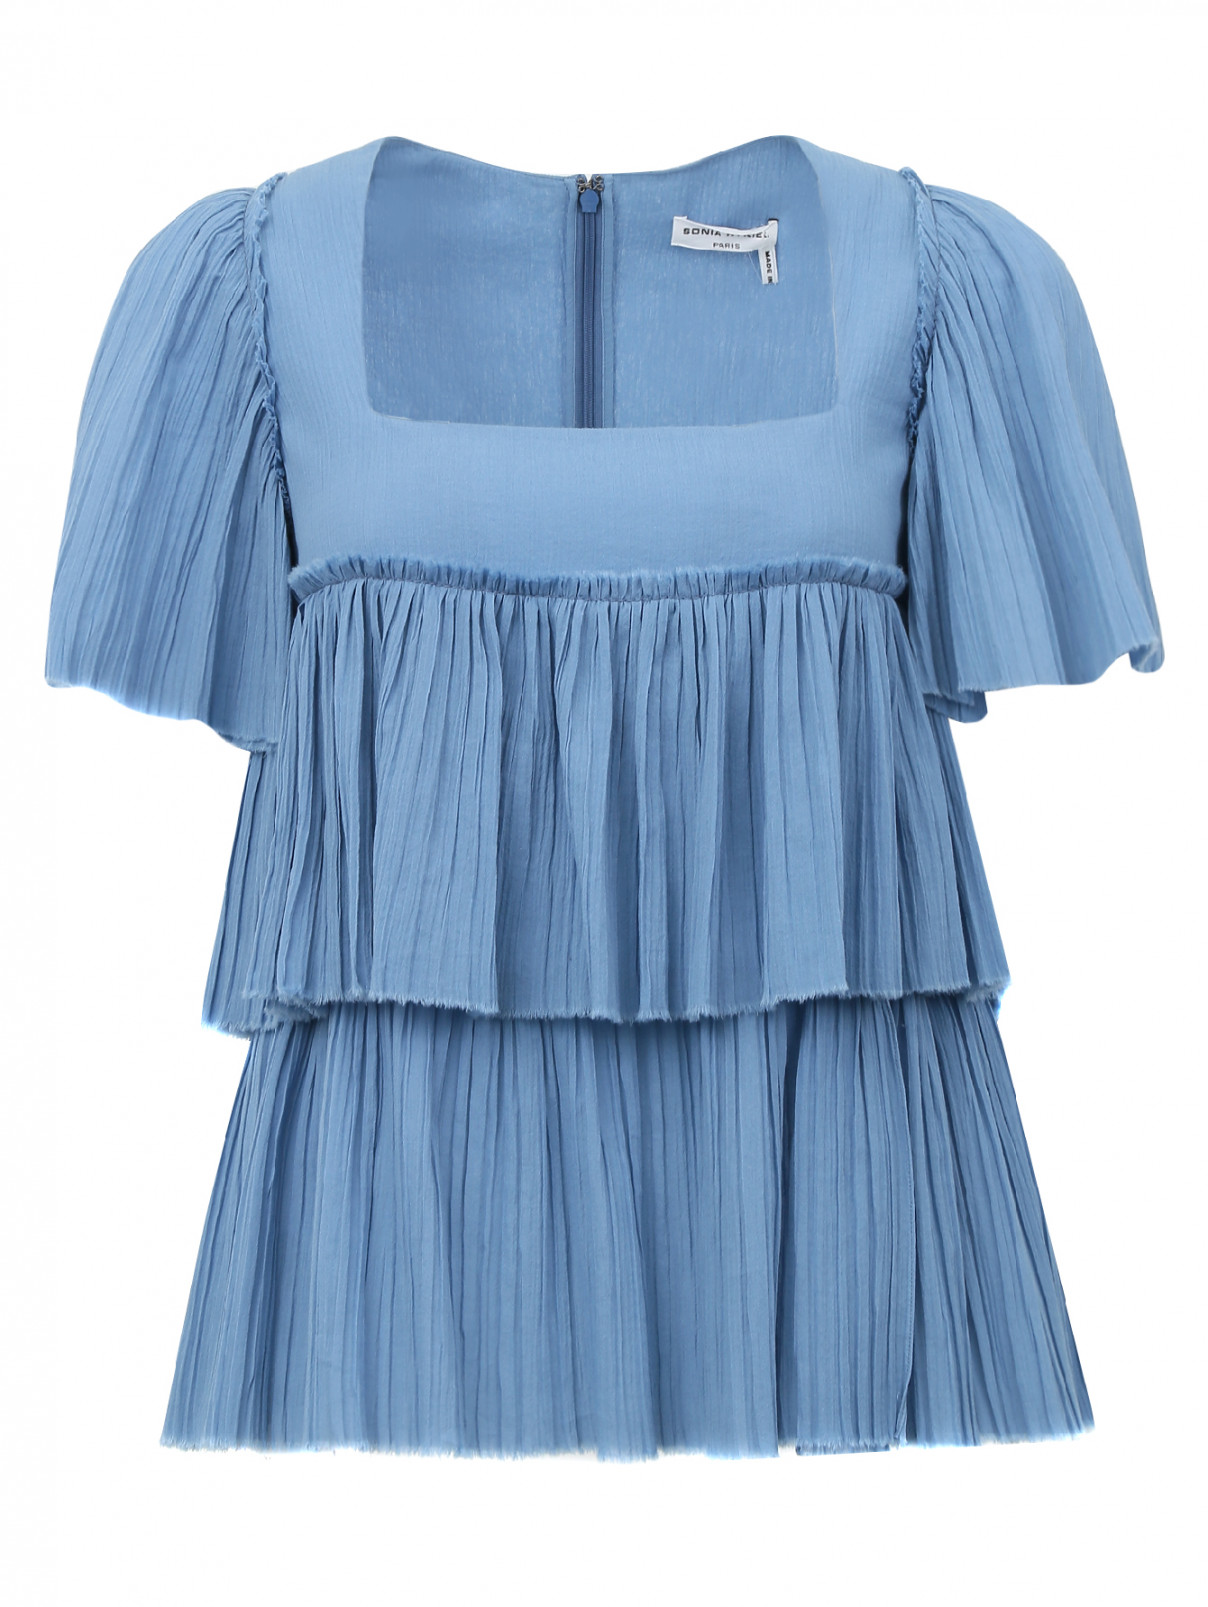 Блуза из хлопка Sonia Rykiel  –  Общий вид  – Цвет:  Синий